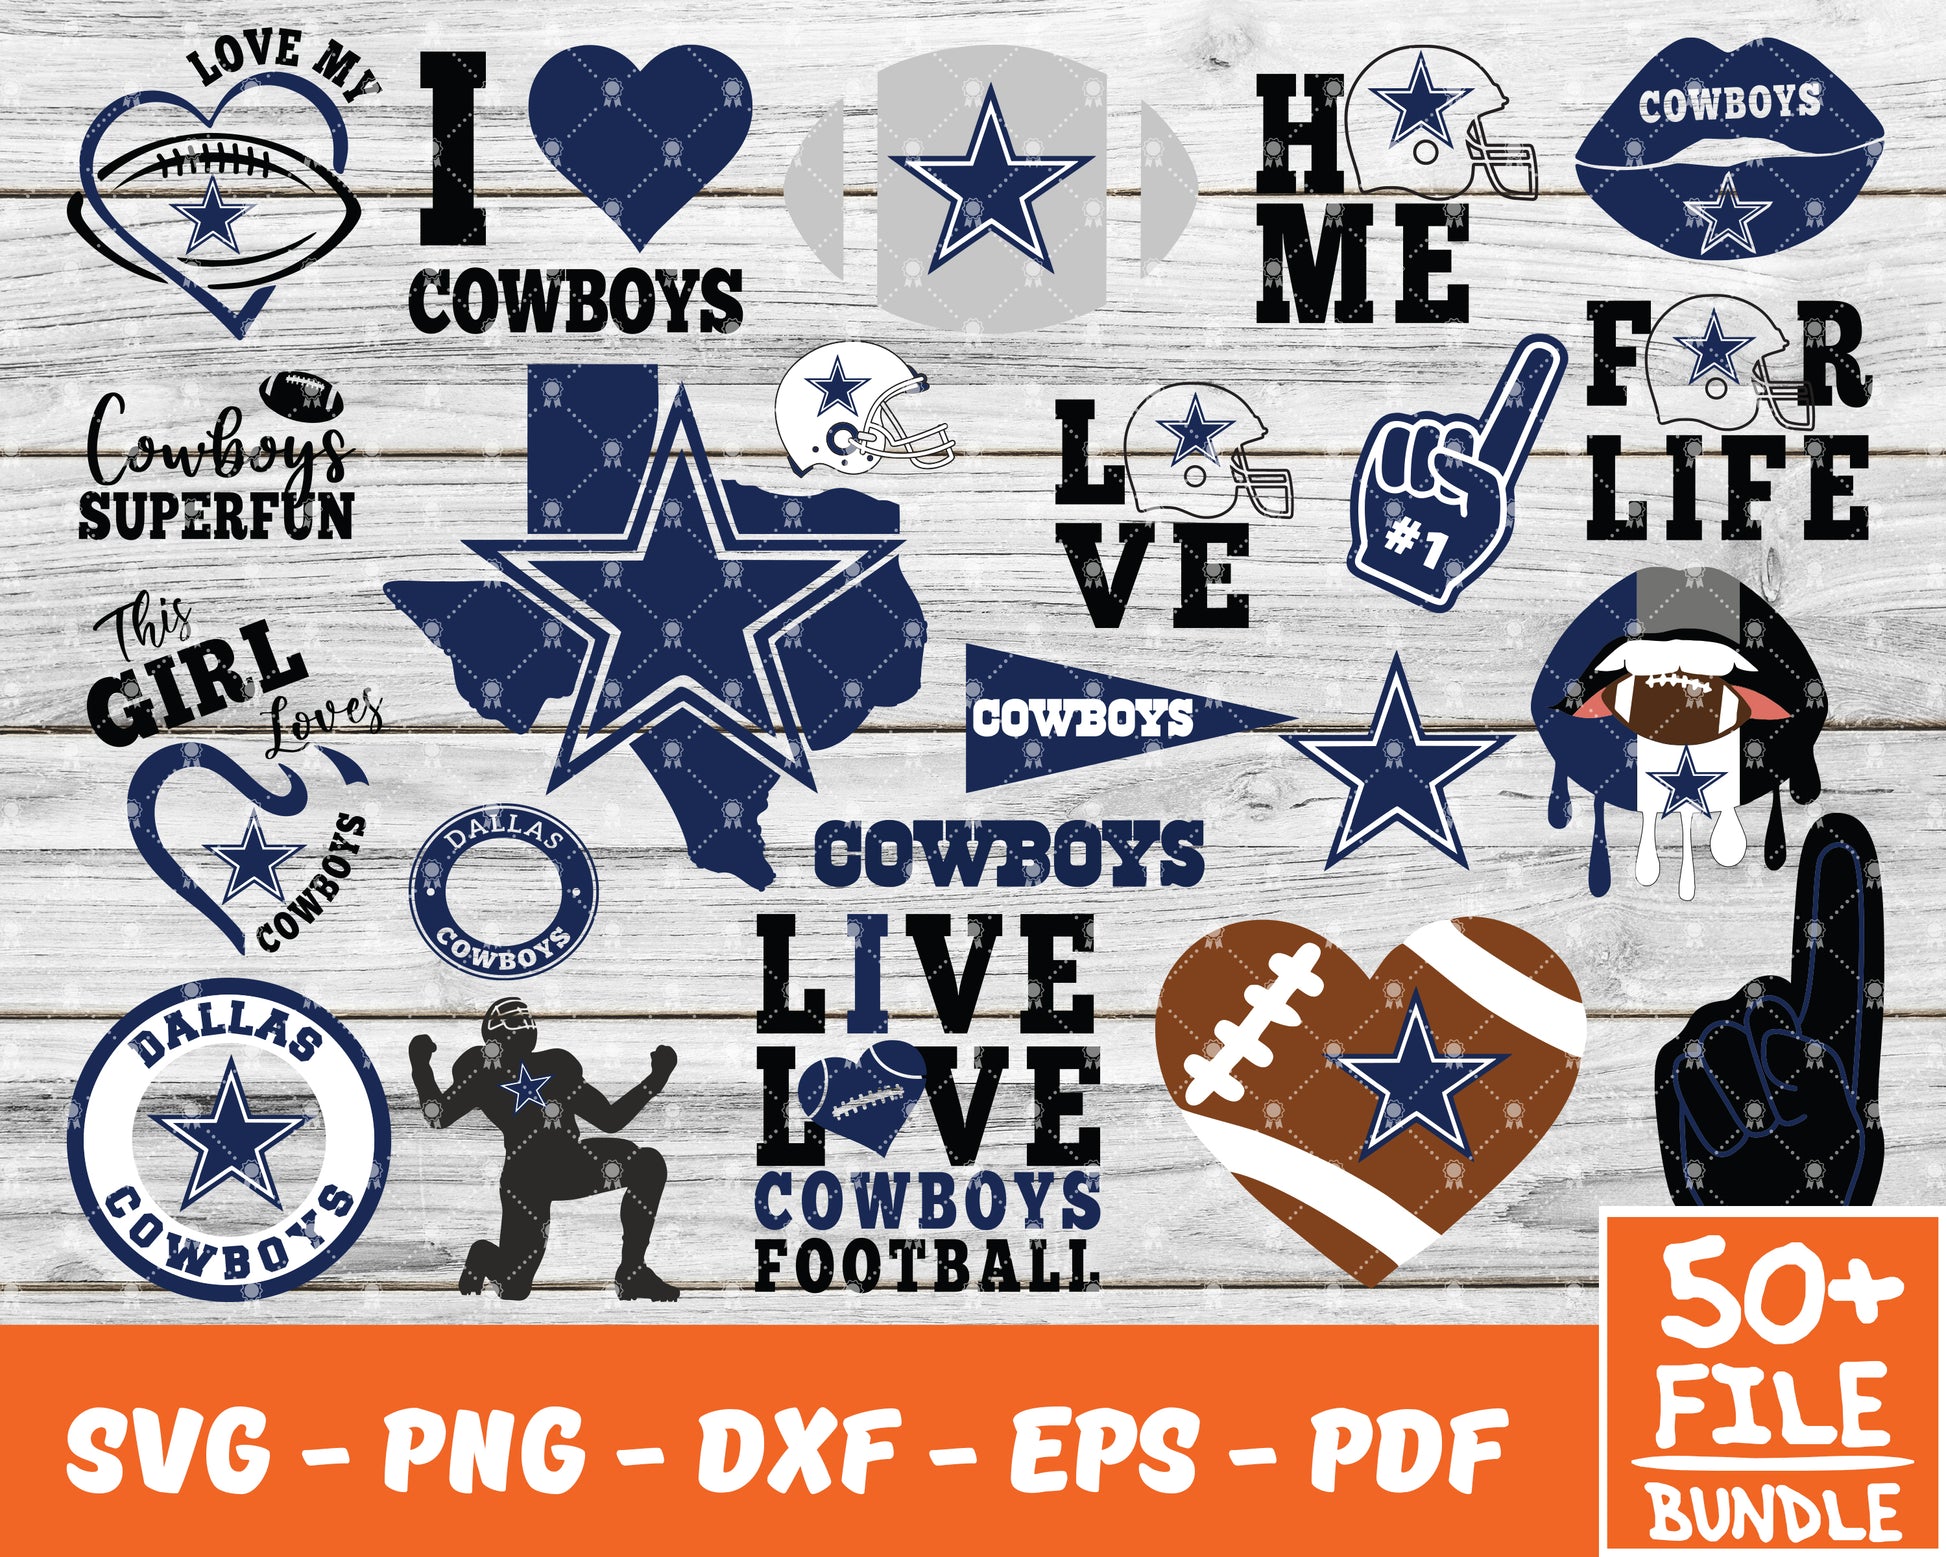 Dalas cowboys bundle SVG, Football cowboys SVG, Football team logo SVG